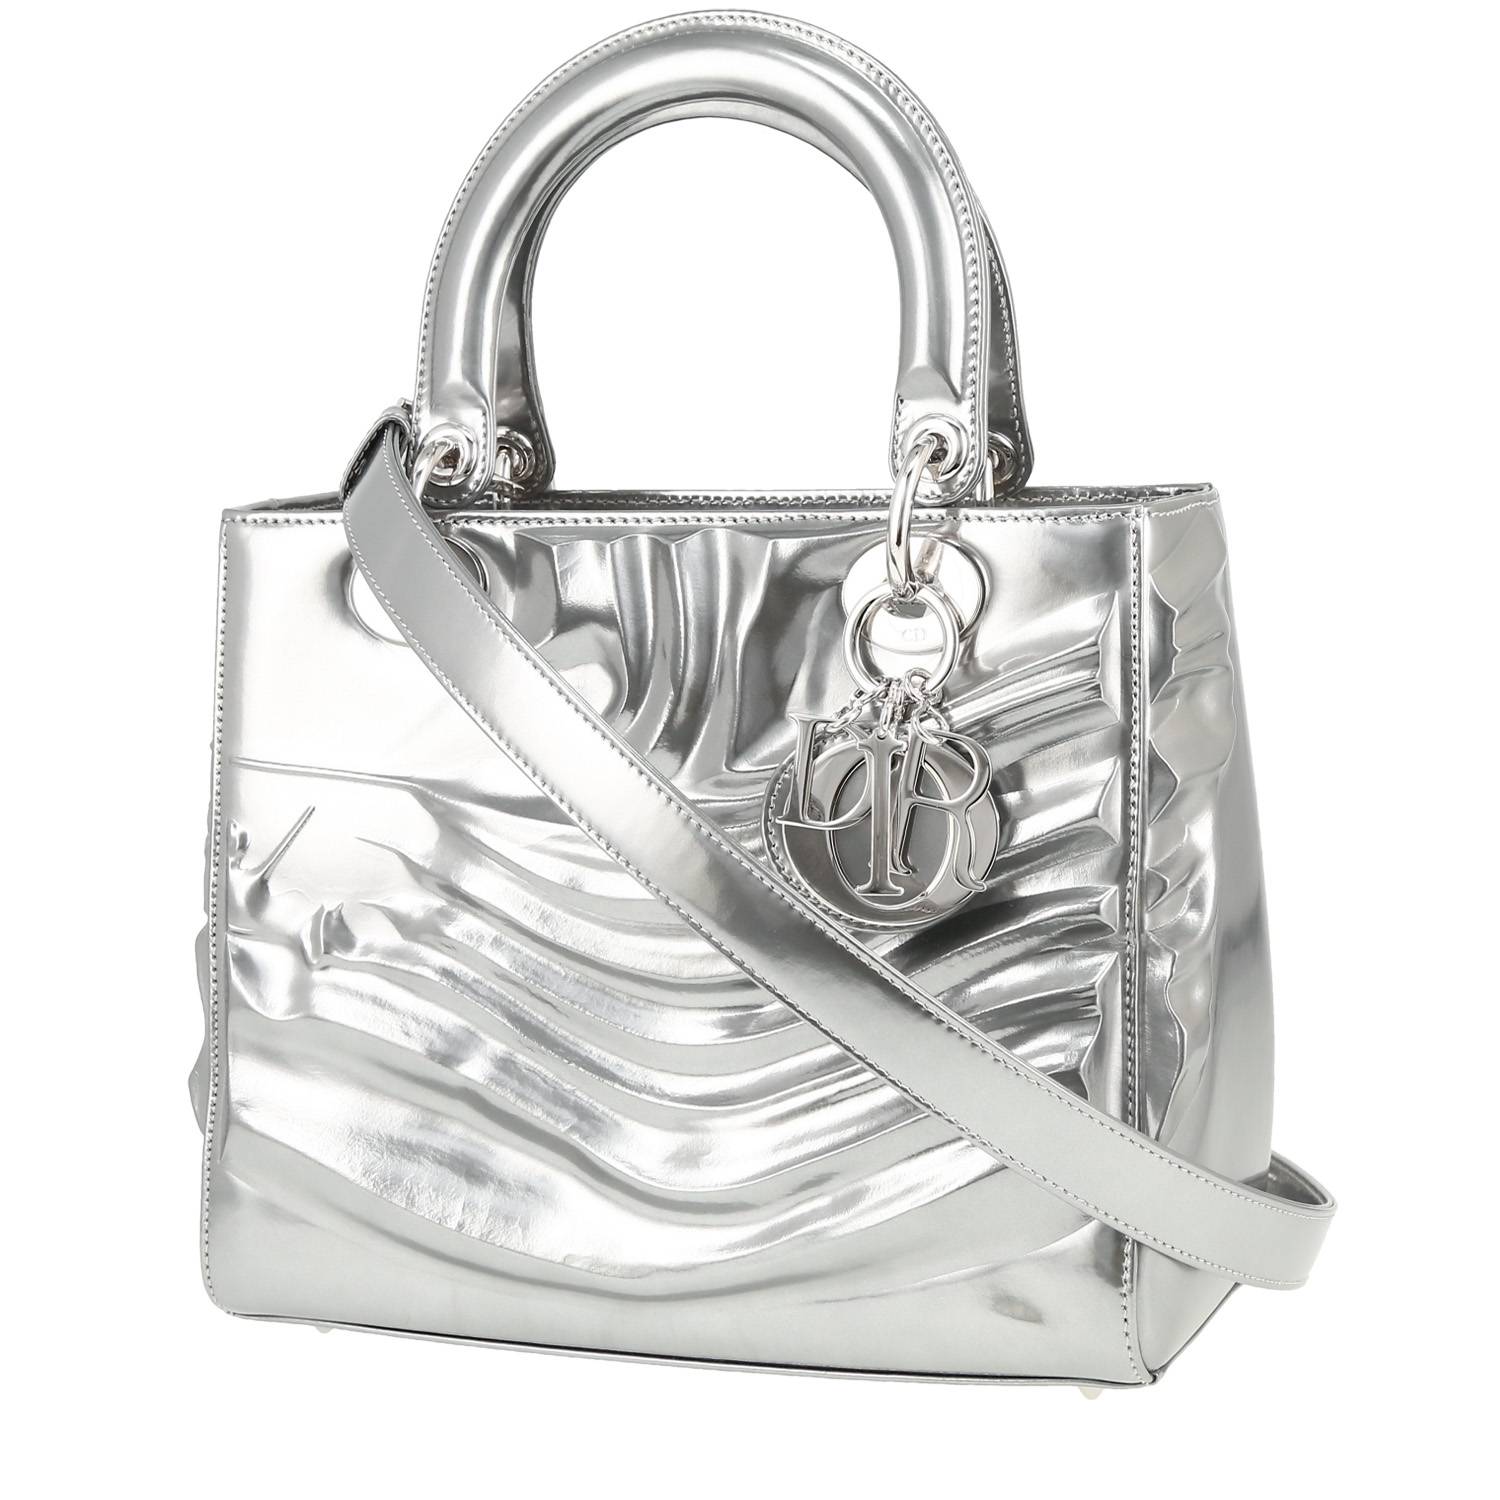 Limited Edition Jason Martin Handbag In Silver Leather